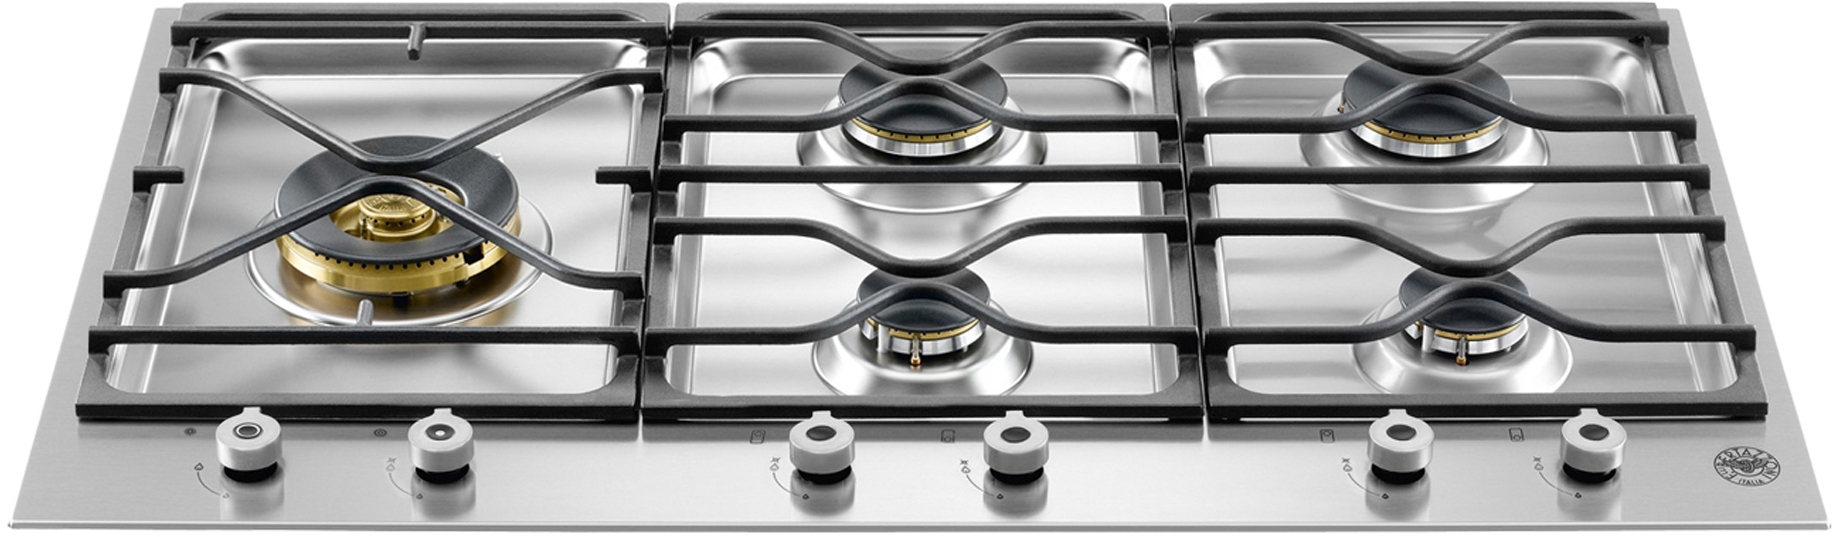 Bertazzoni Professional Series 36" Stainless Steel Gas Cooktop